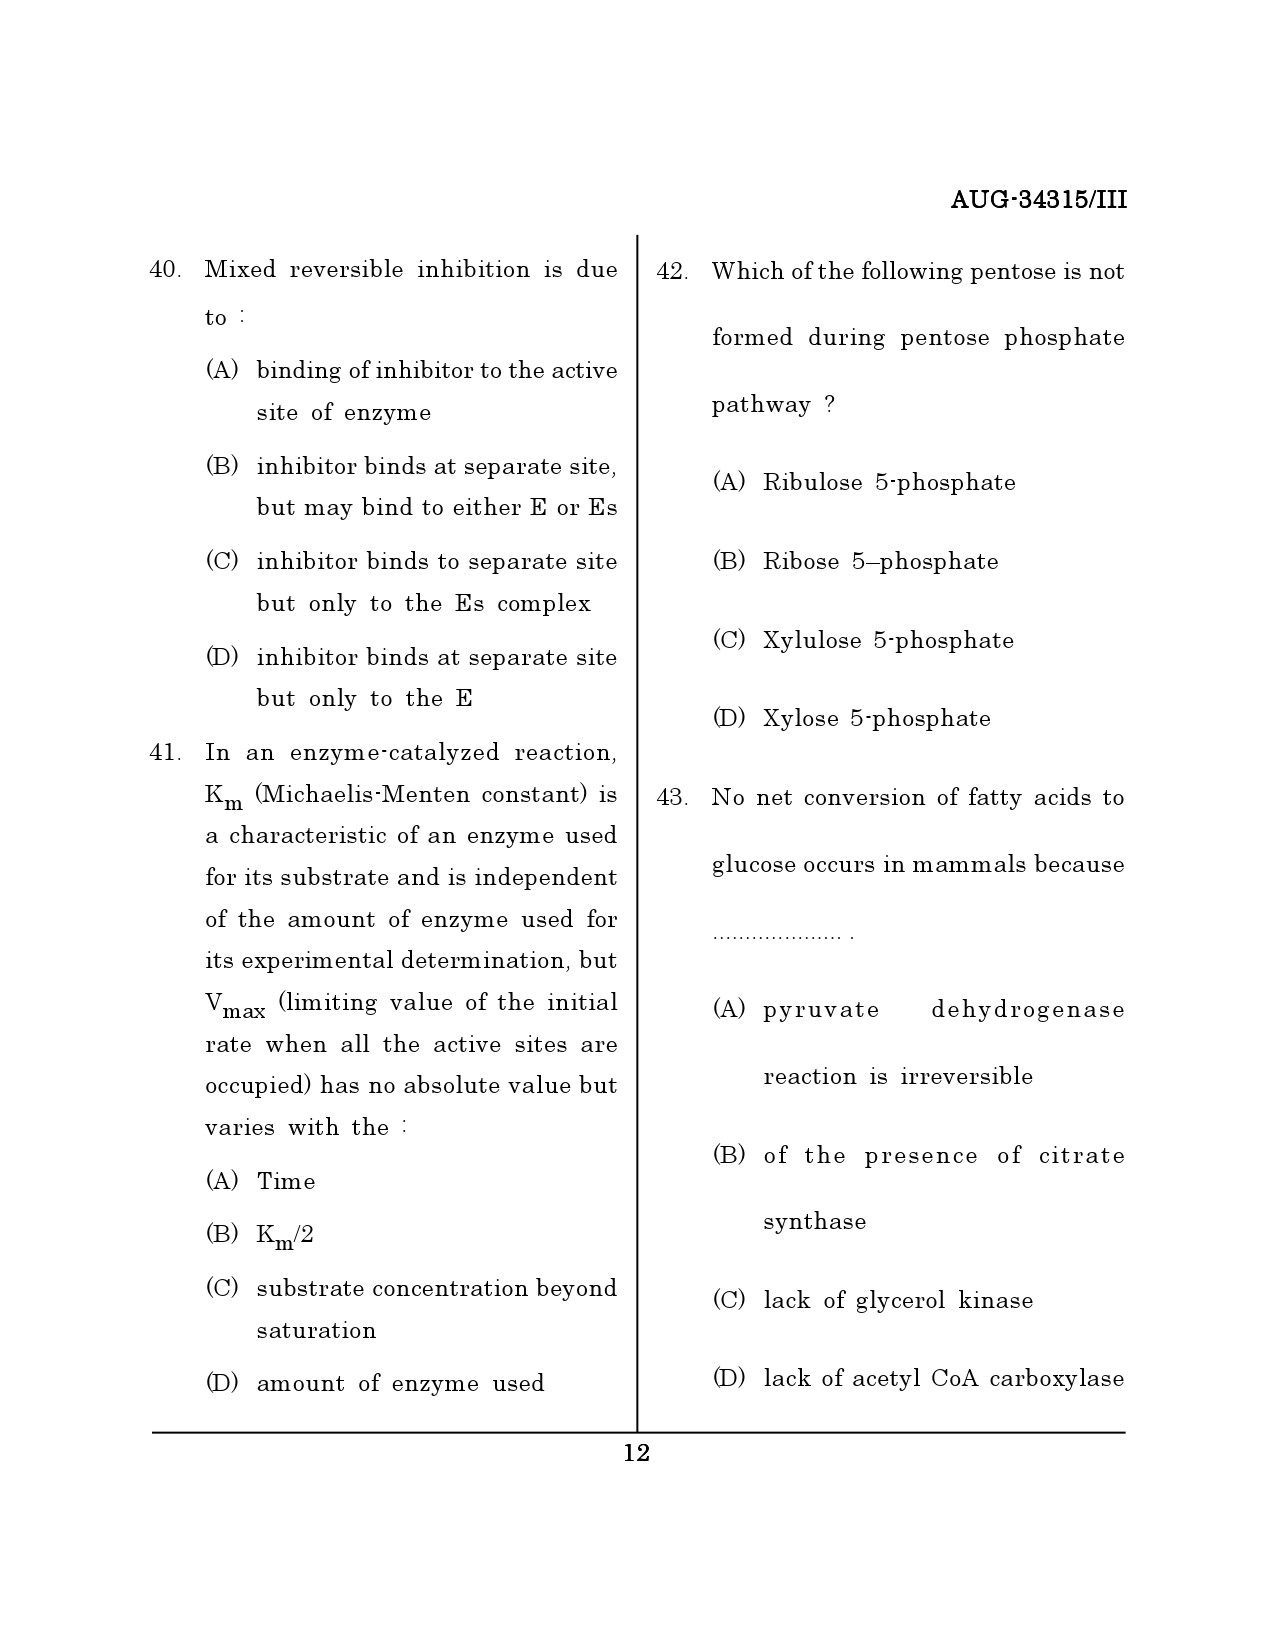 Maharashtra SET Life Sciences Question Paper III August 2015 11